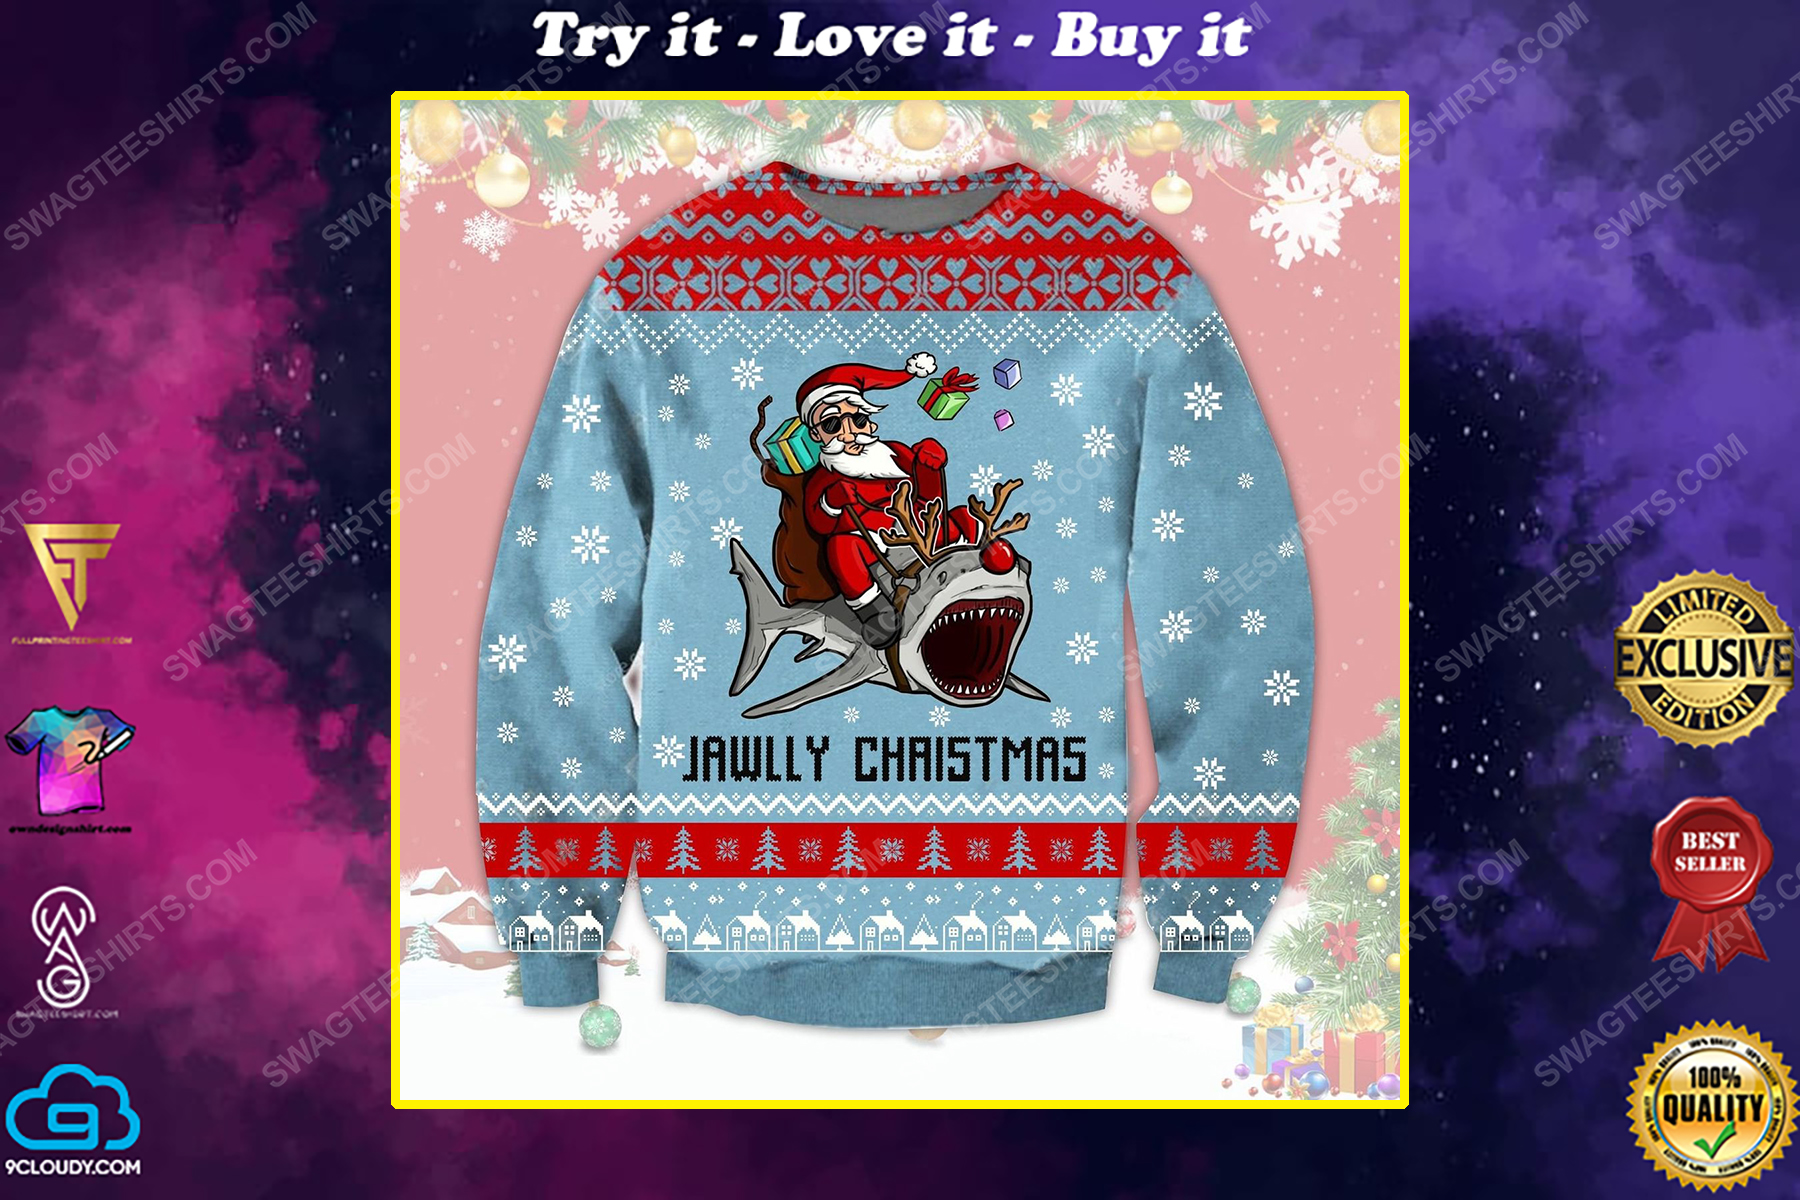 Santa riding shark jawlly christmas ugly christmas sweater 1